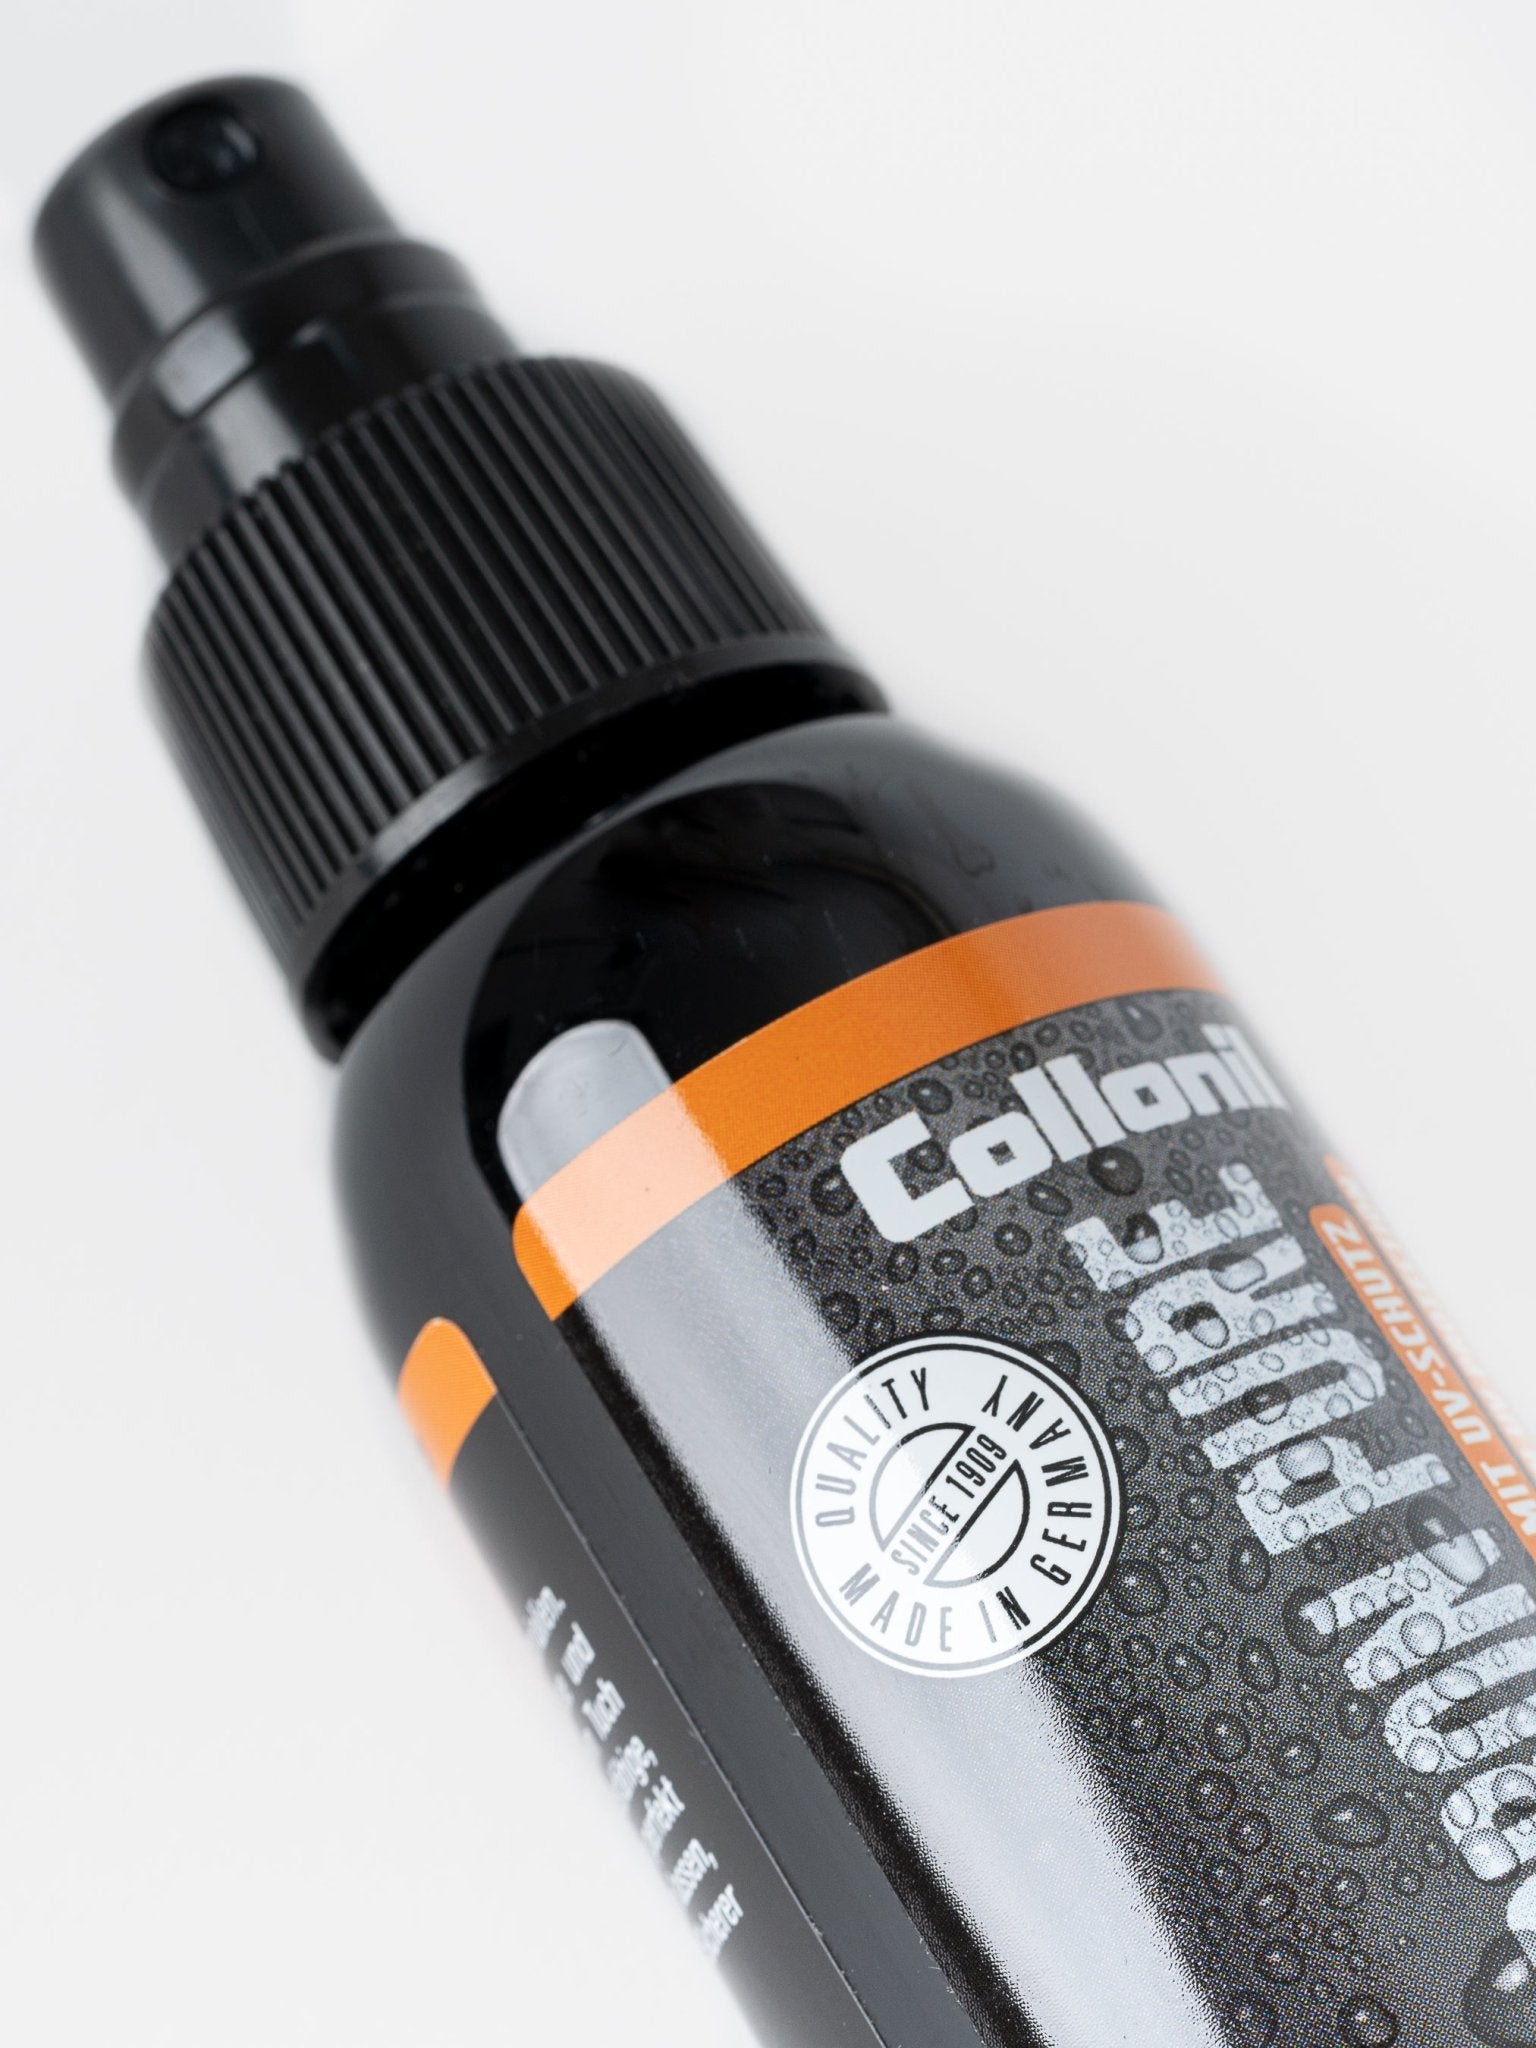 The Collonil Carbon Pure Spray - 100ml - Cambridge Satchel